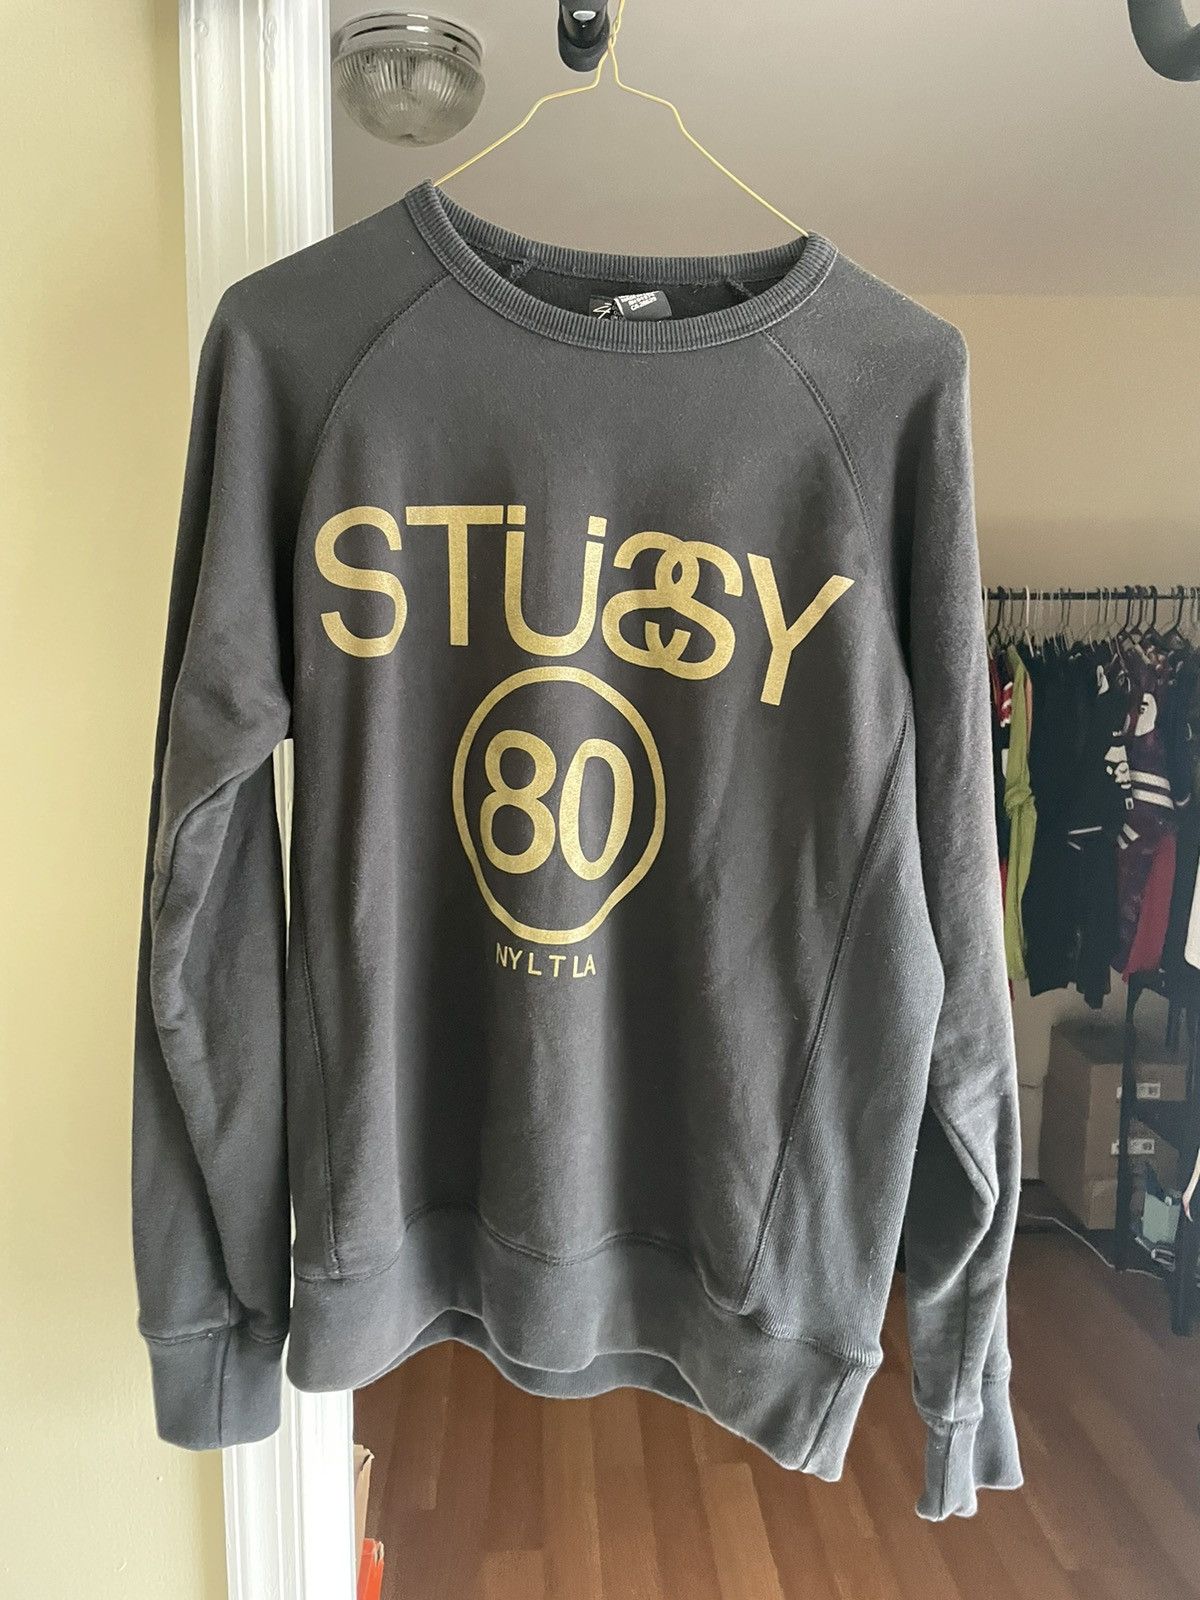 Stussy Stussy x Patta stripe loose gauge sweater L | Grailed